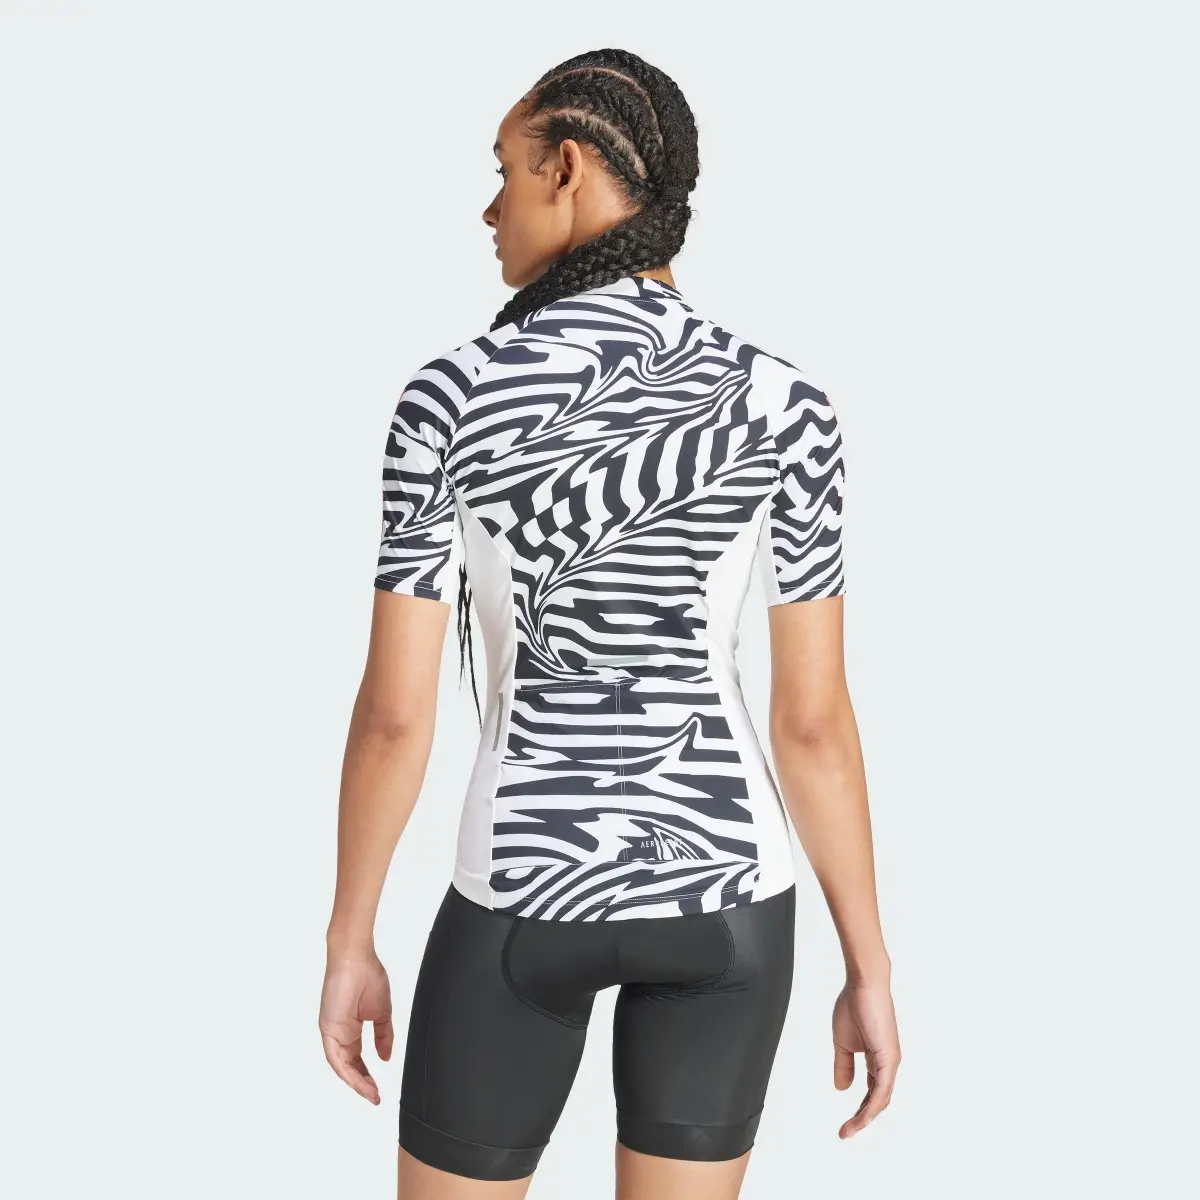 Adidas Essentials 3-Stripes Fast Zebra Cycling Jersey. 3